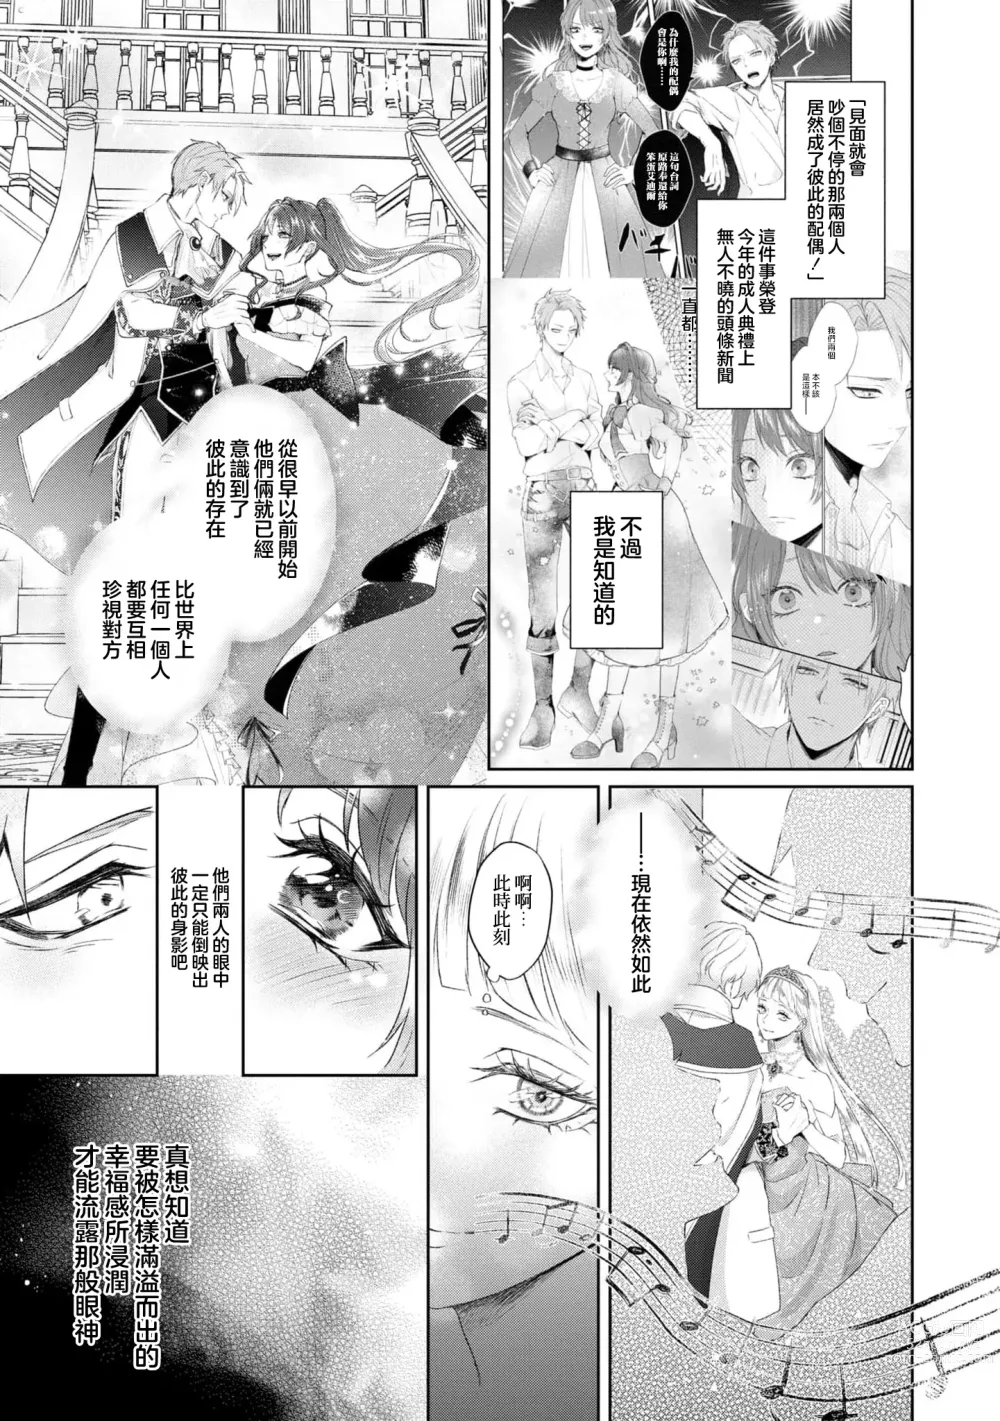 Page 9 of manga 亡国的公主被强制许配给了最后的骑士